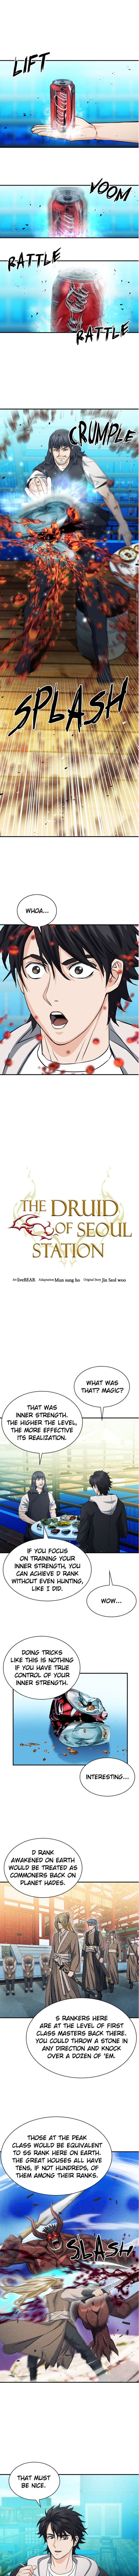 Seoul Station Druid 103 1